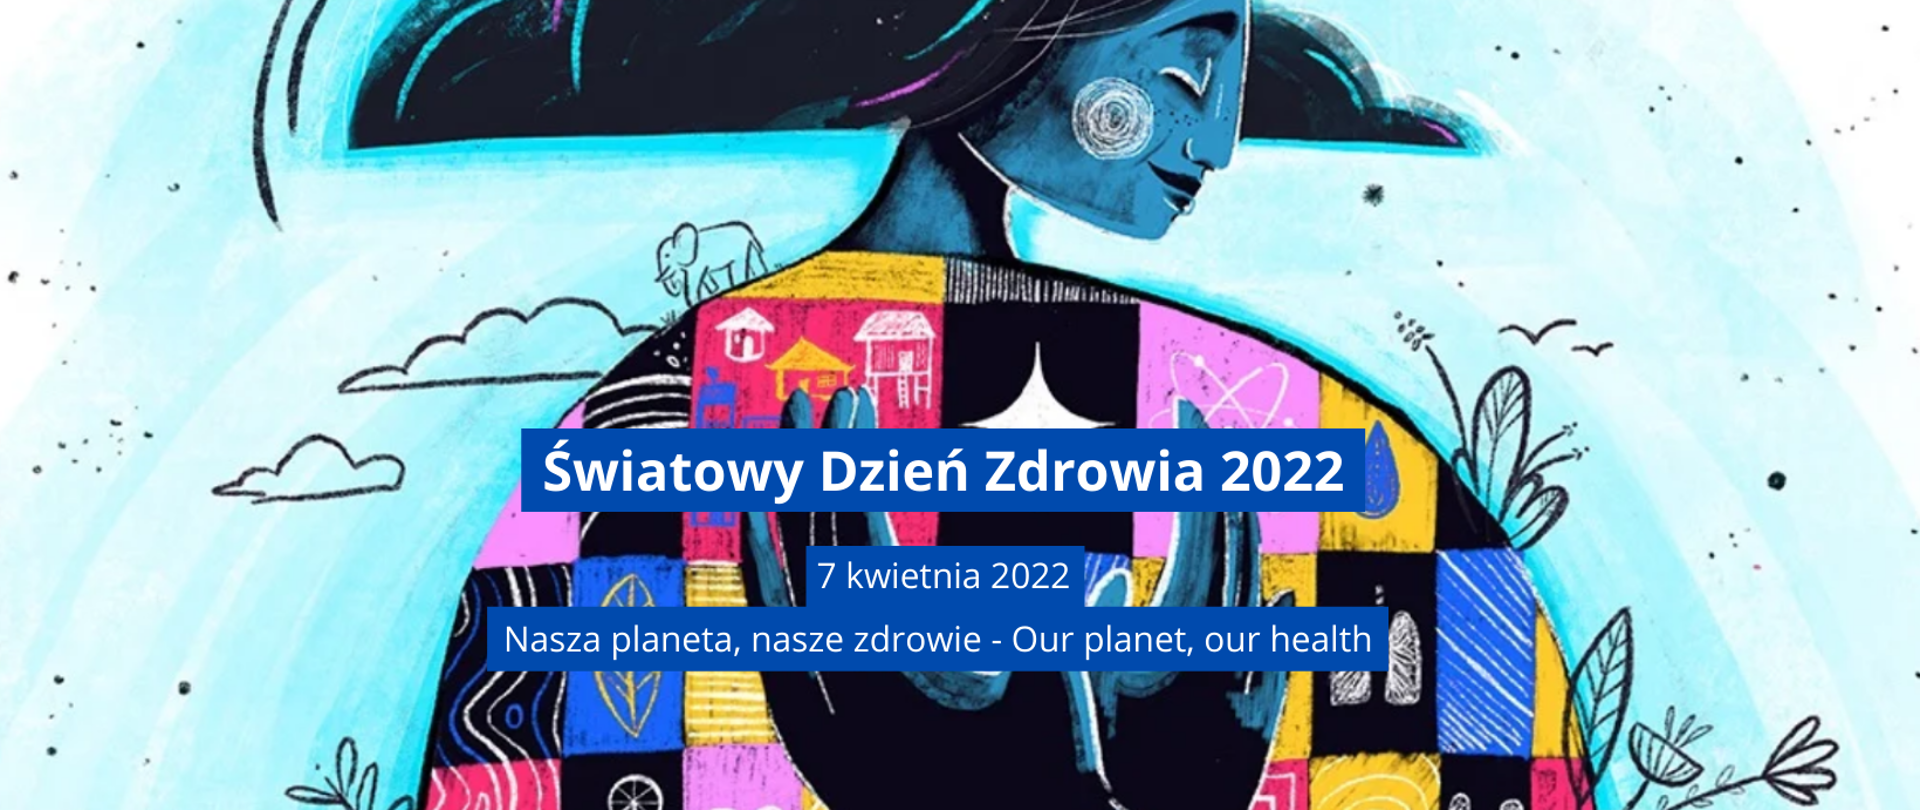 ŚDZ 2022 - logo